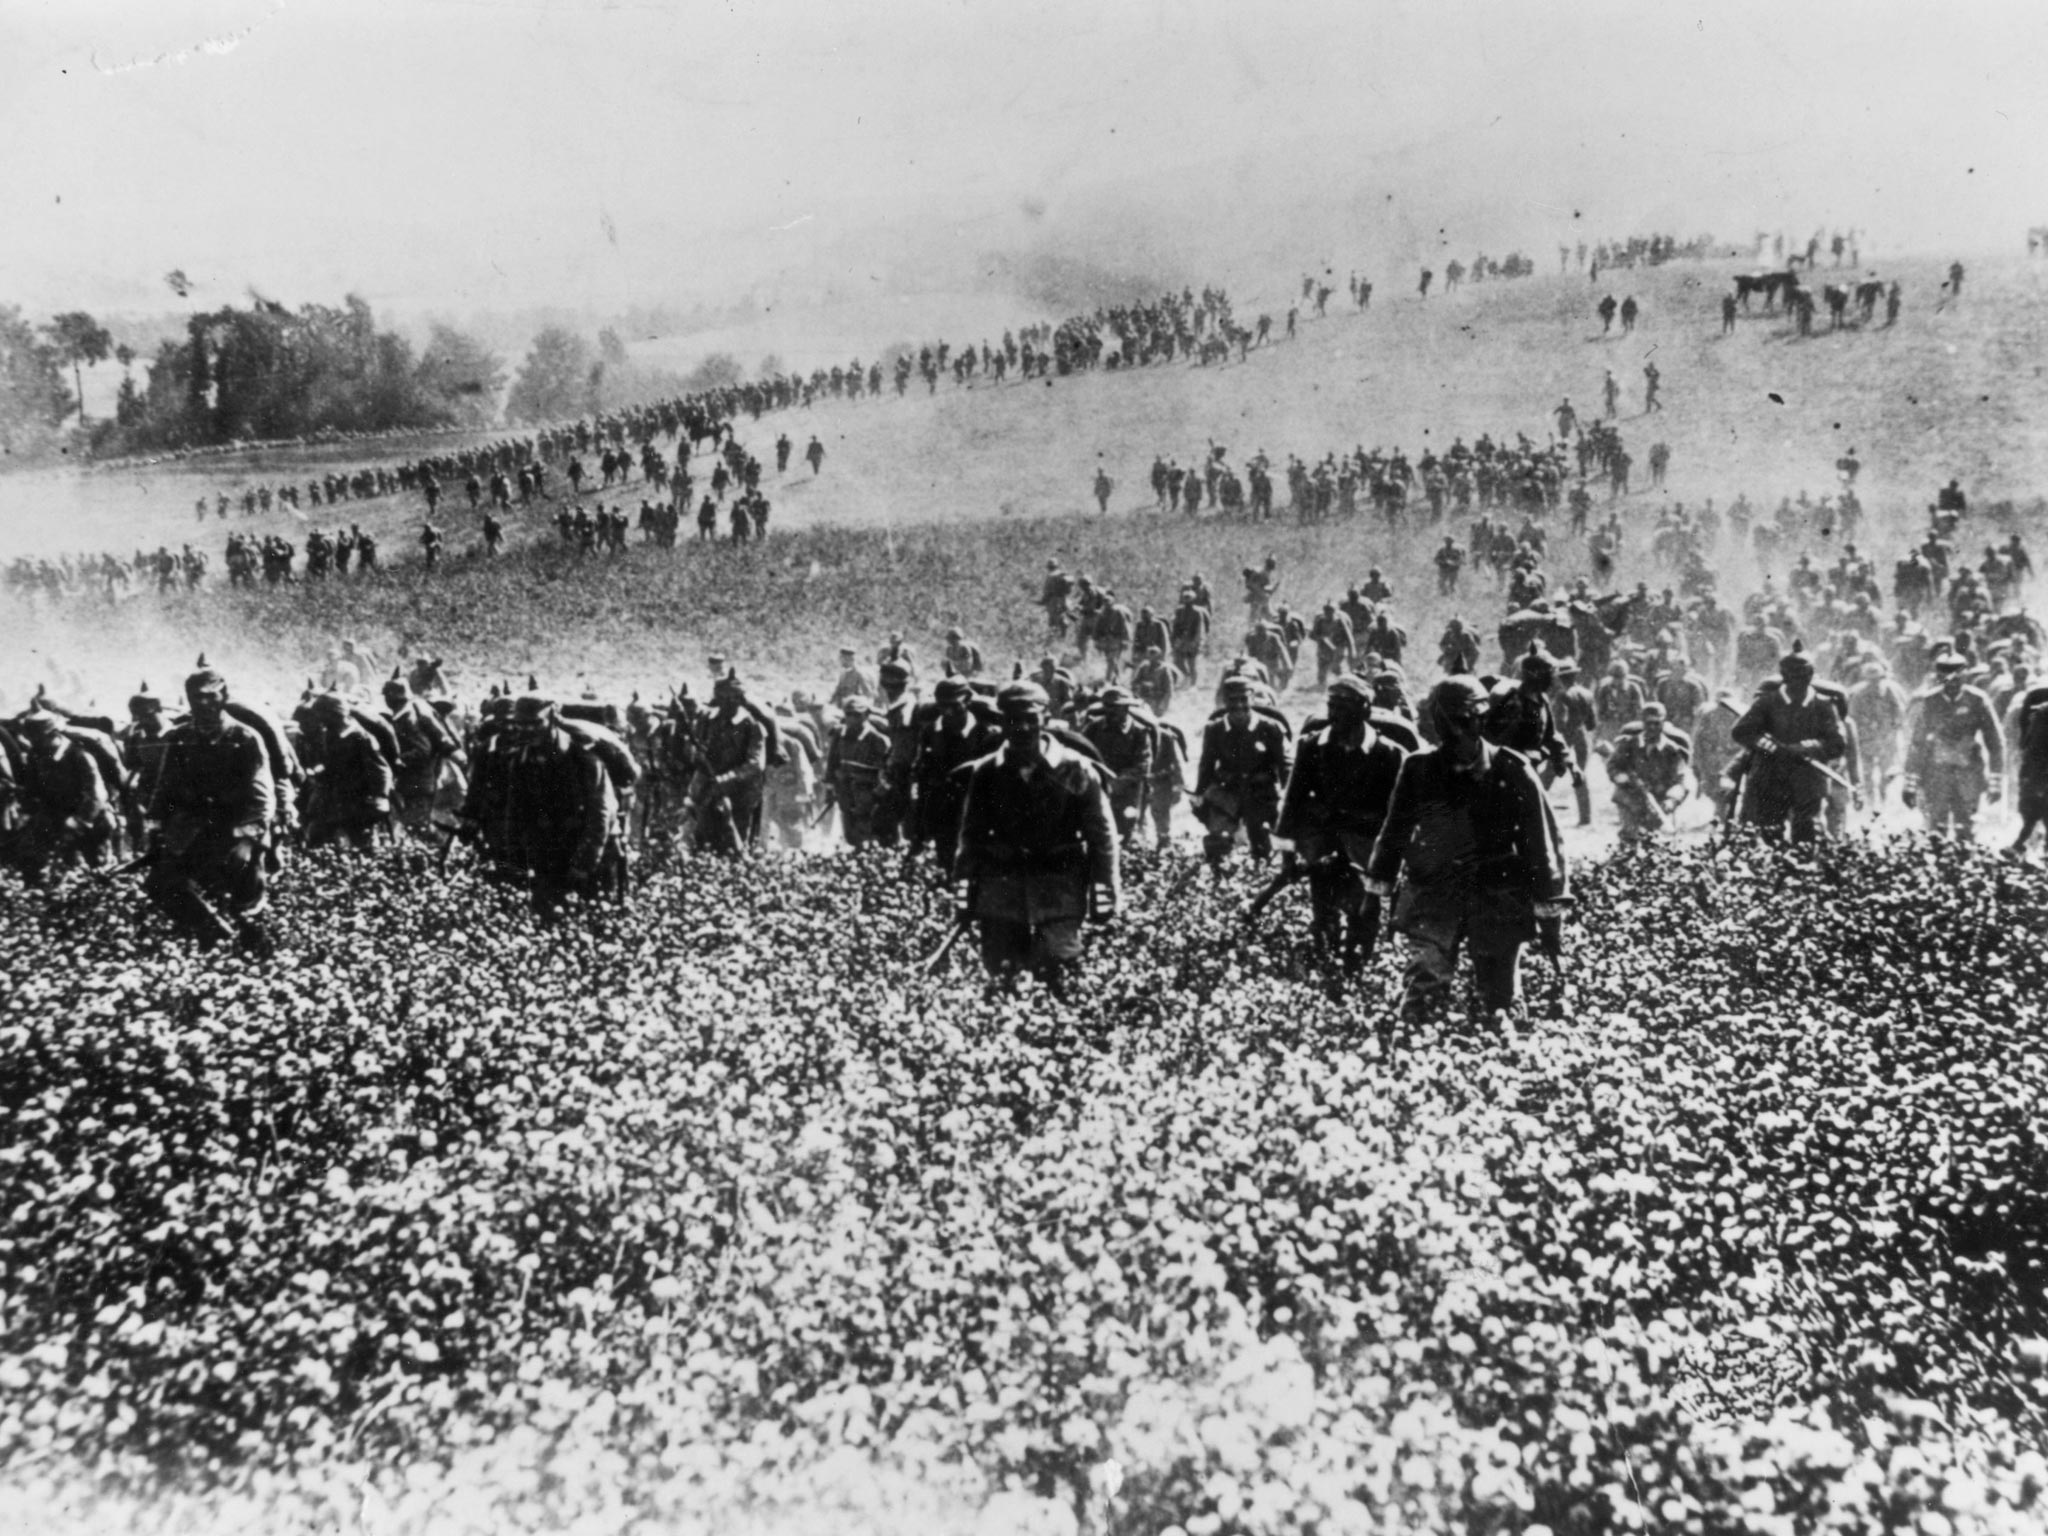 German infantry advance through Belgium in August 1914